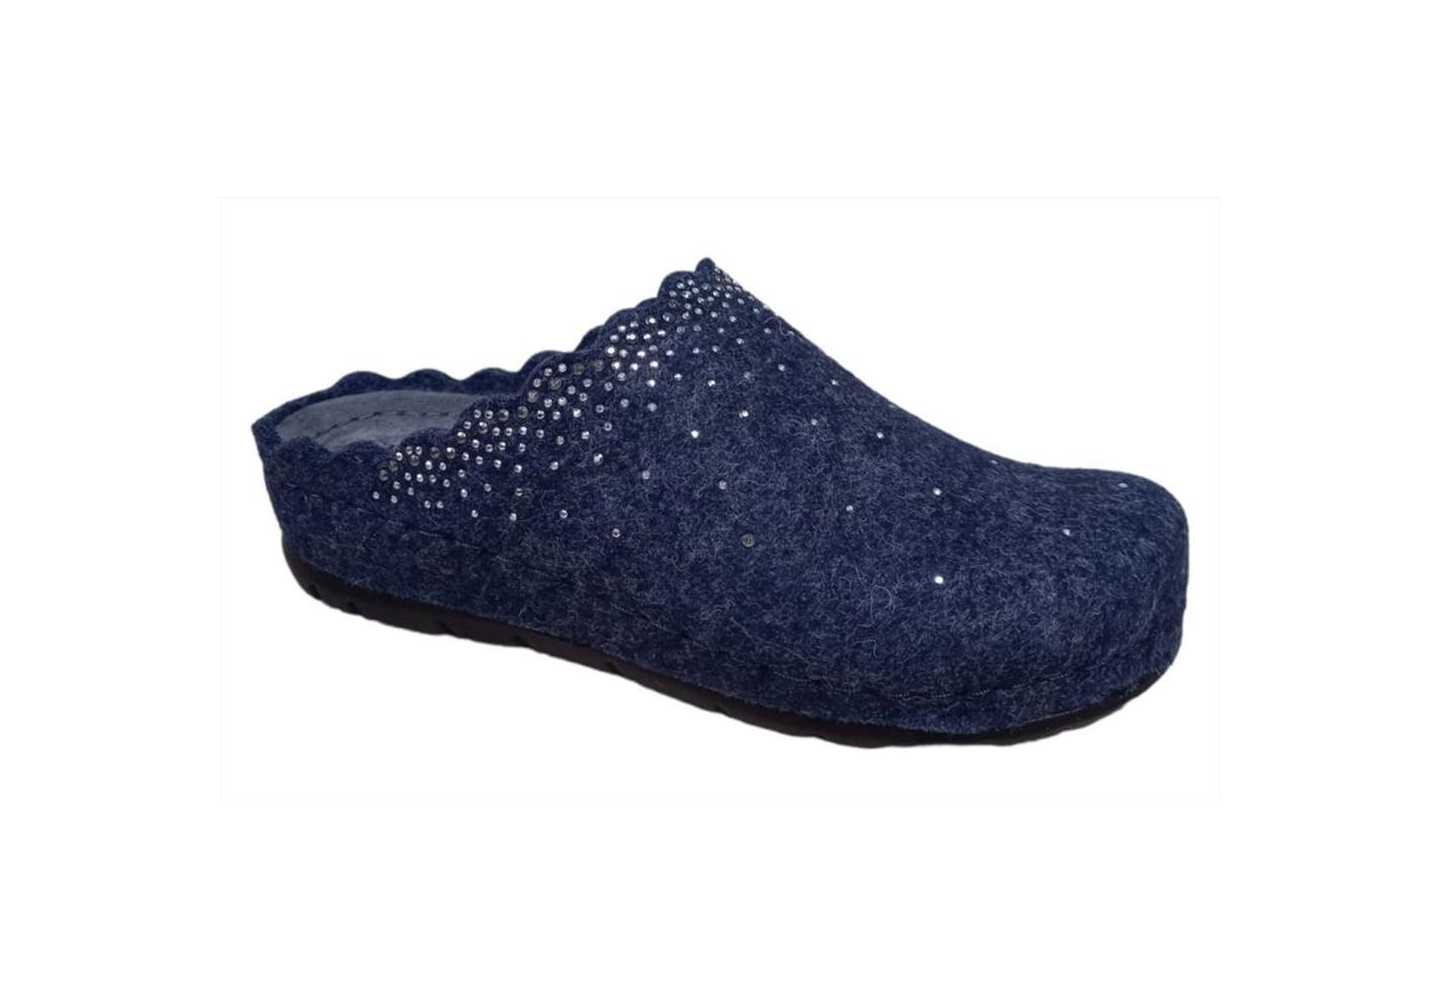 pantofola da donna in morbido panno Grunland CI2632 blu